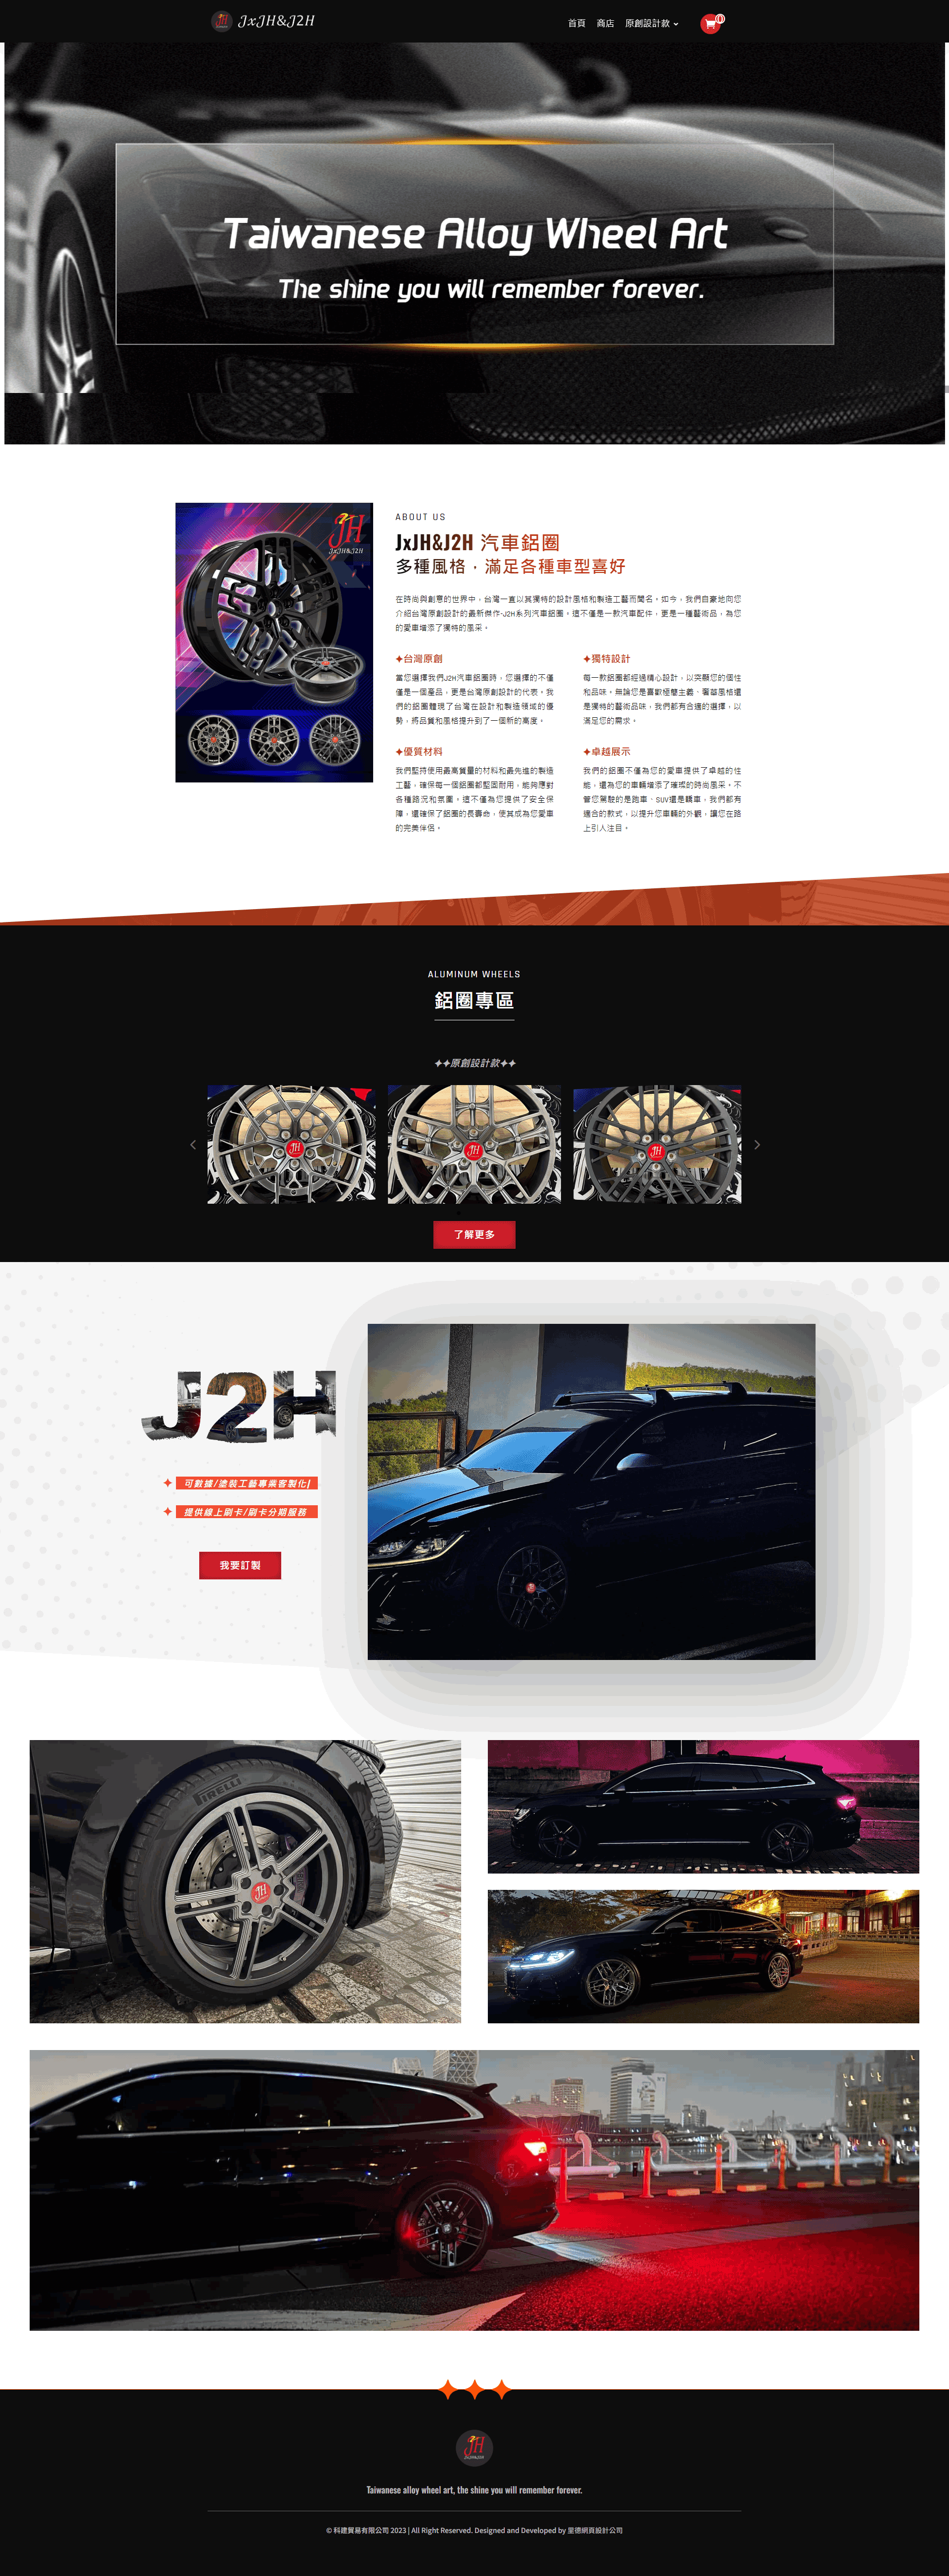 JxJH&J2H，製造與營造業企業形象網站案例